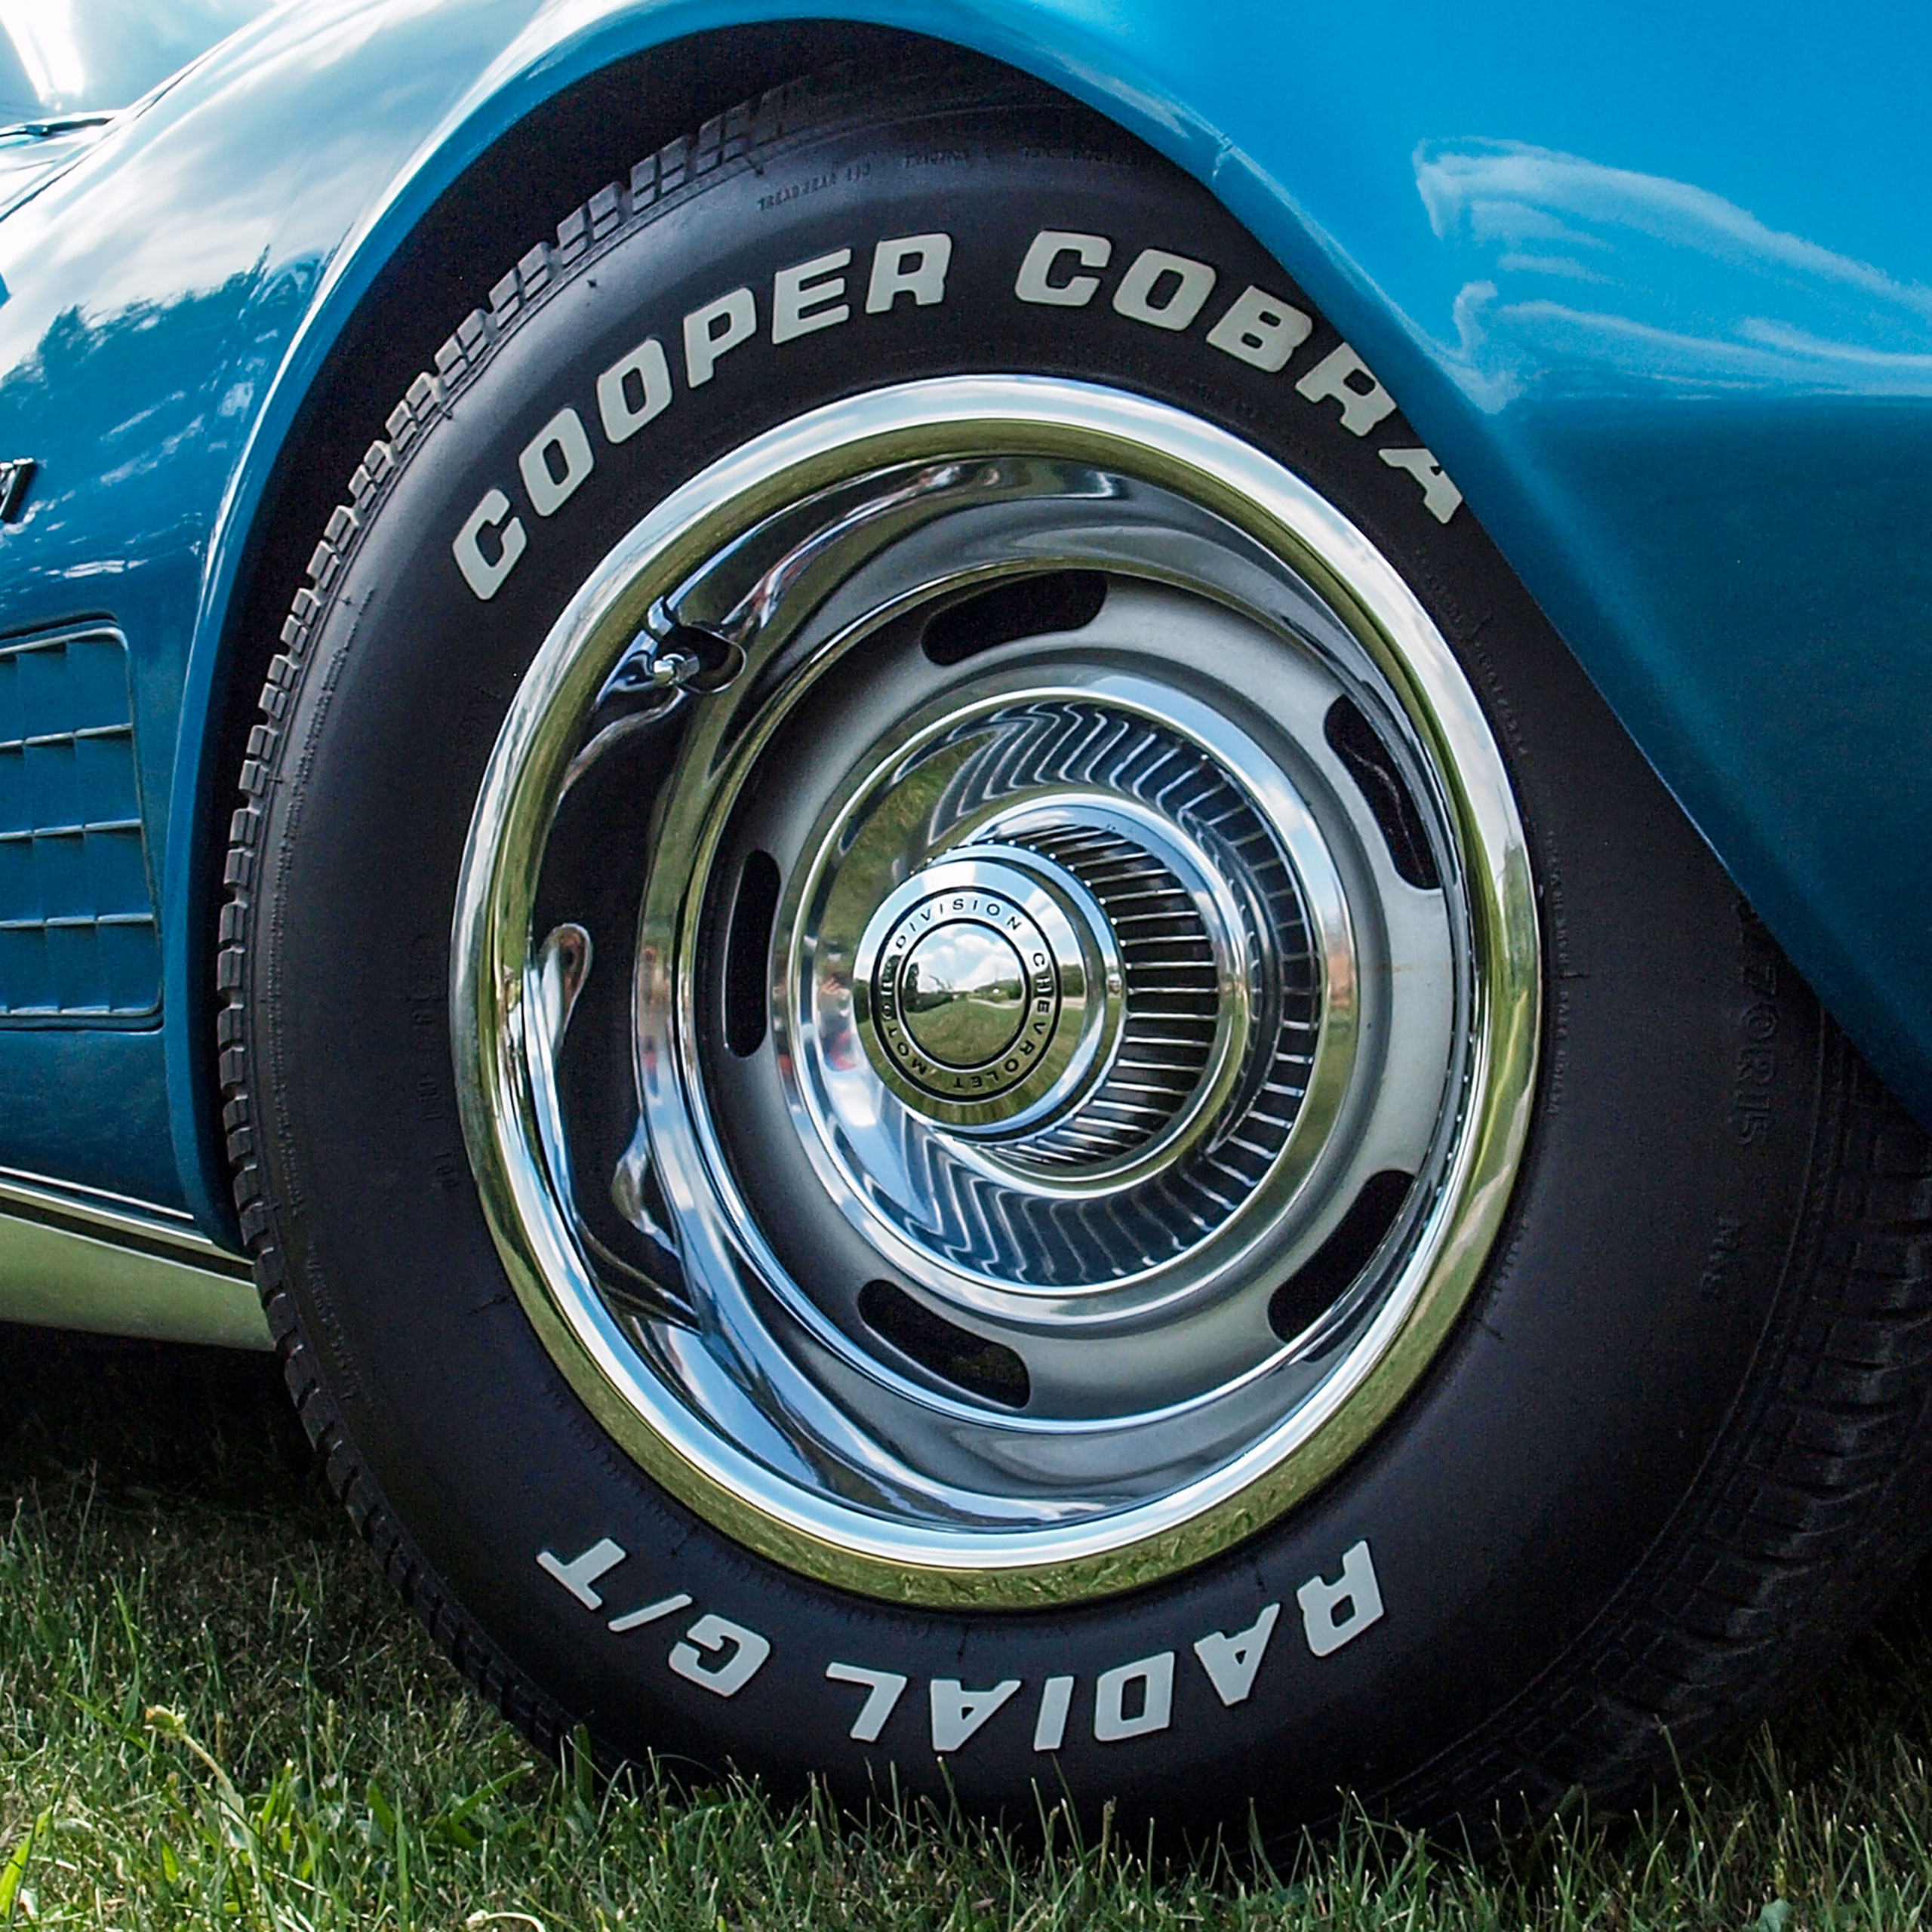 69-82 C3 Corvette 41008 15"x8" Rallye Wheel Set W/Replacement Hubps & Stainless Steel Trim Rings